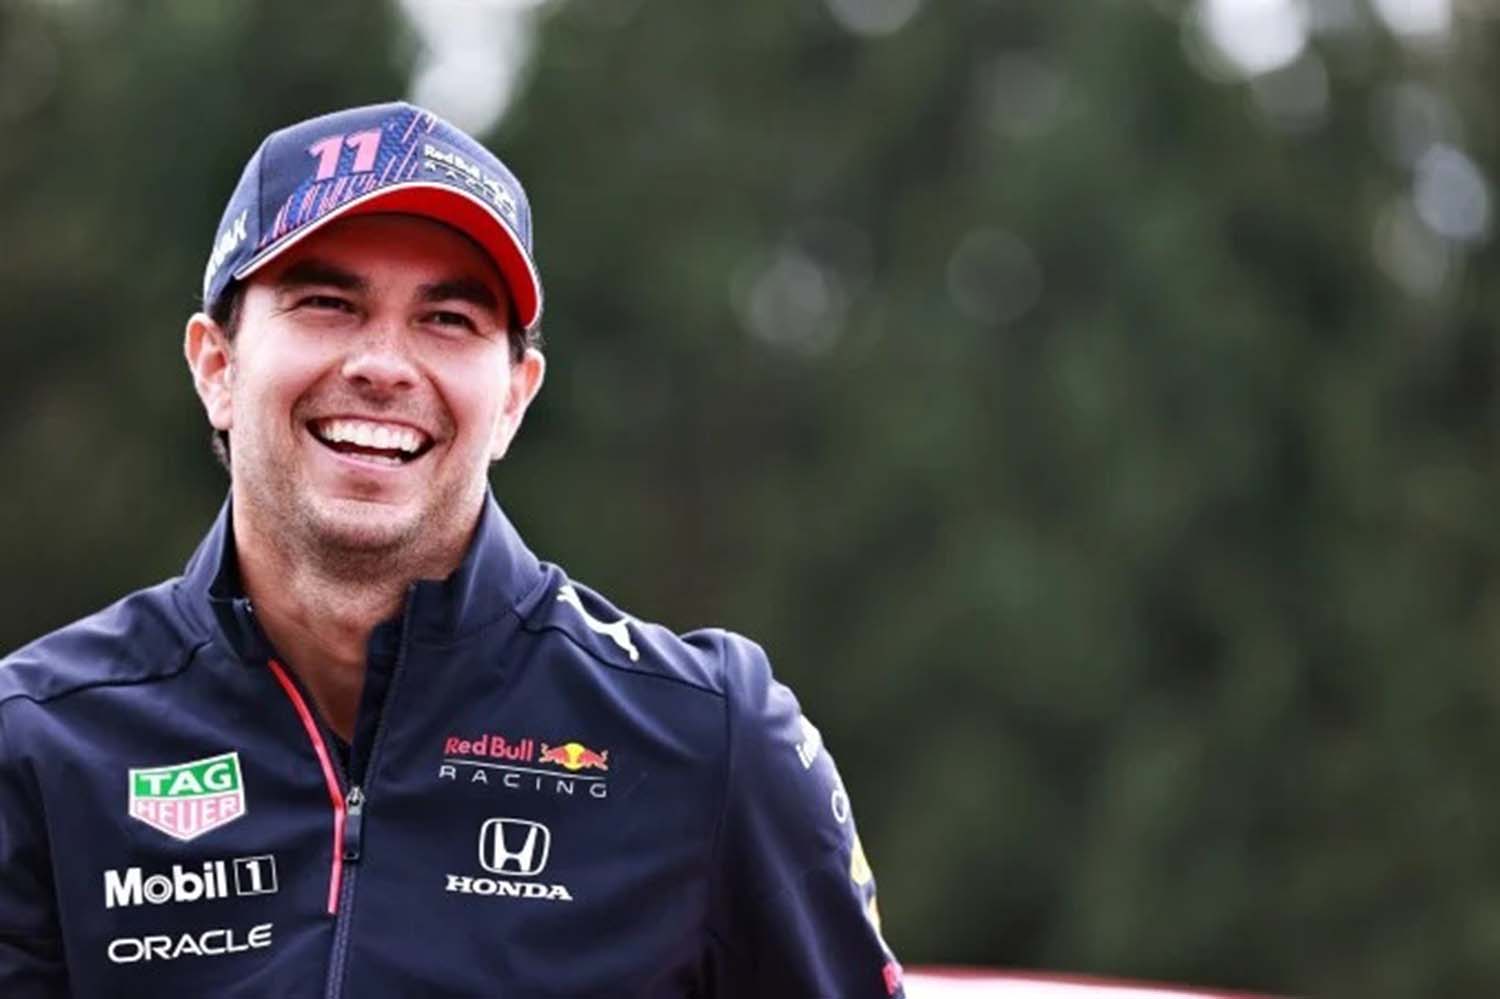 Red Bull Racing Honda Re-Sign Sergio Perez